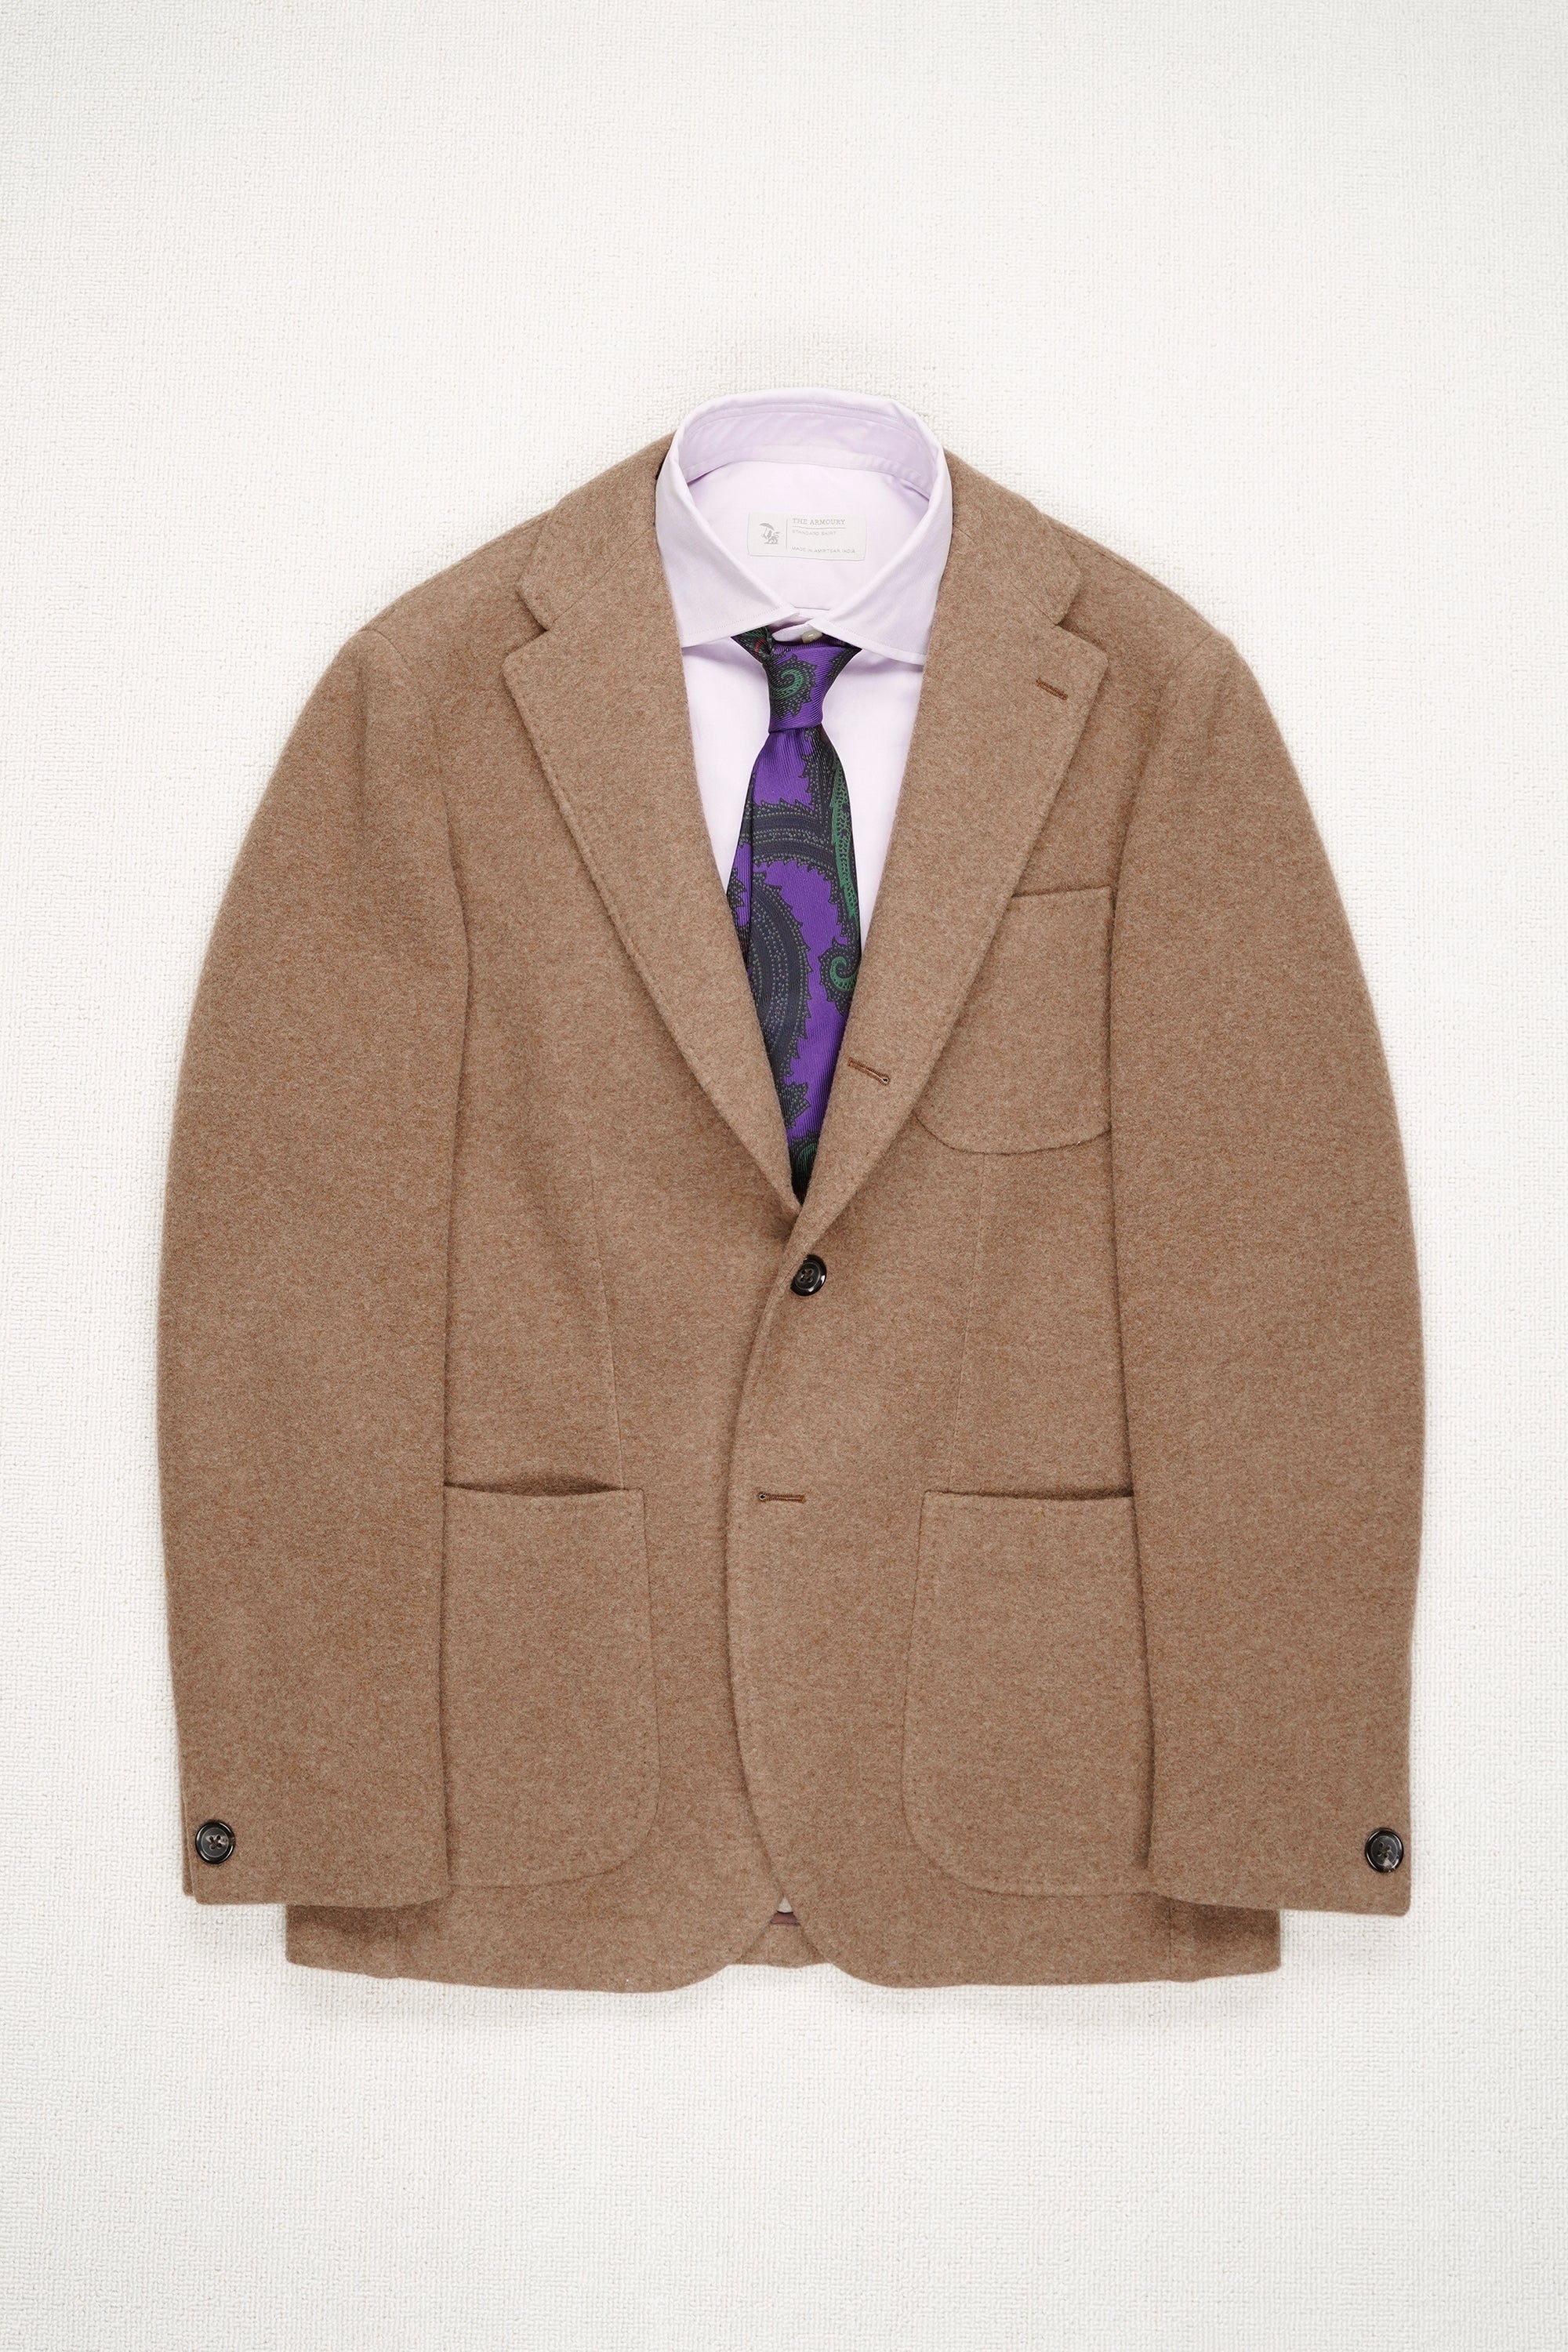 Ring Jacket Model 297 Brown Wool/Cashmere Sport Coat